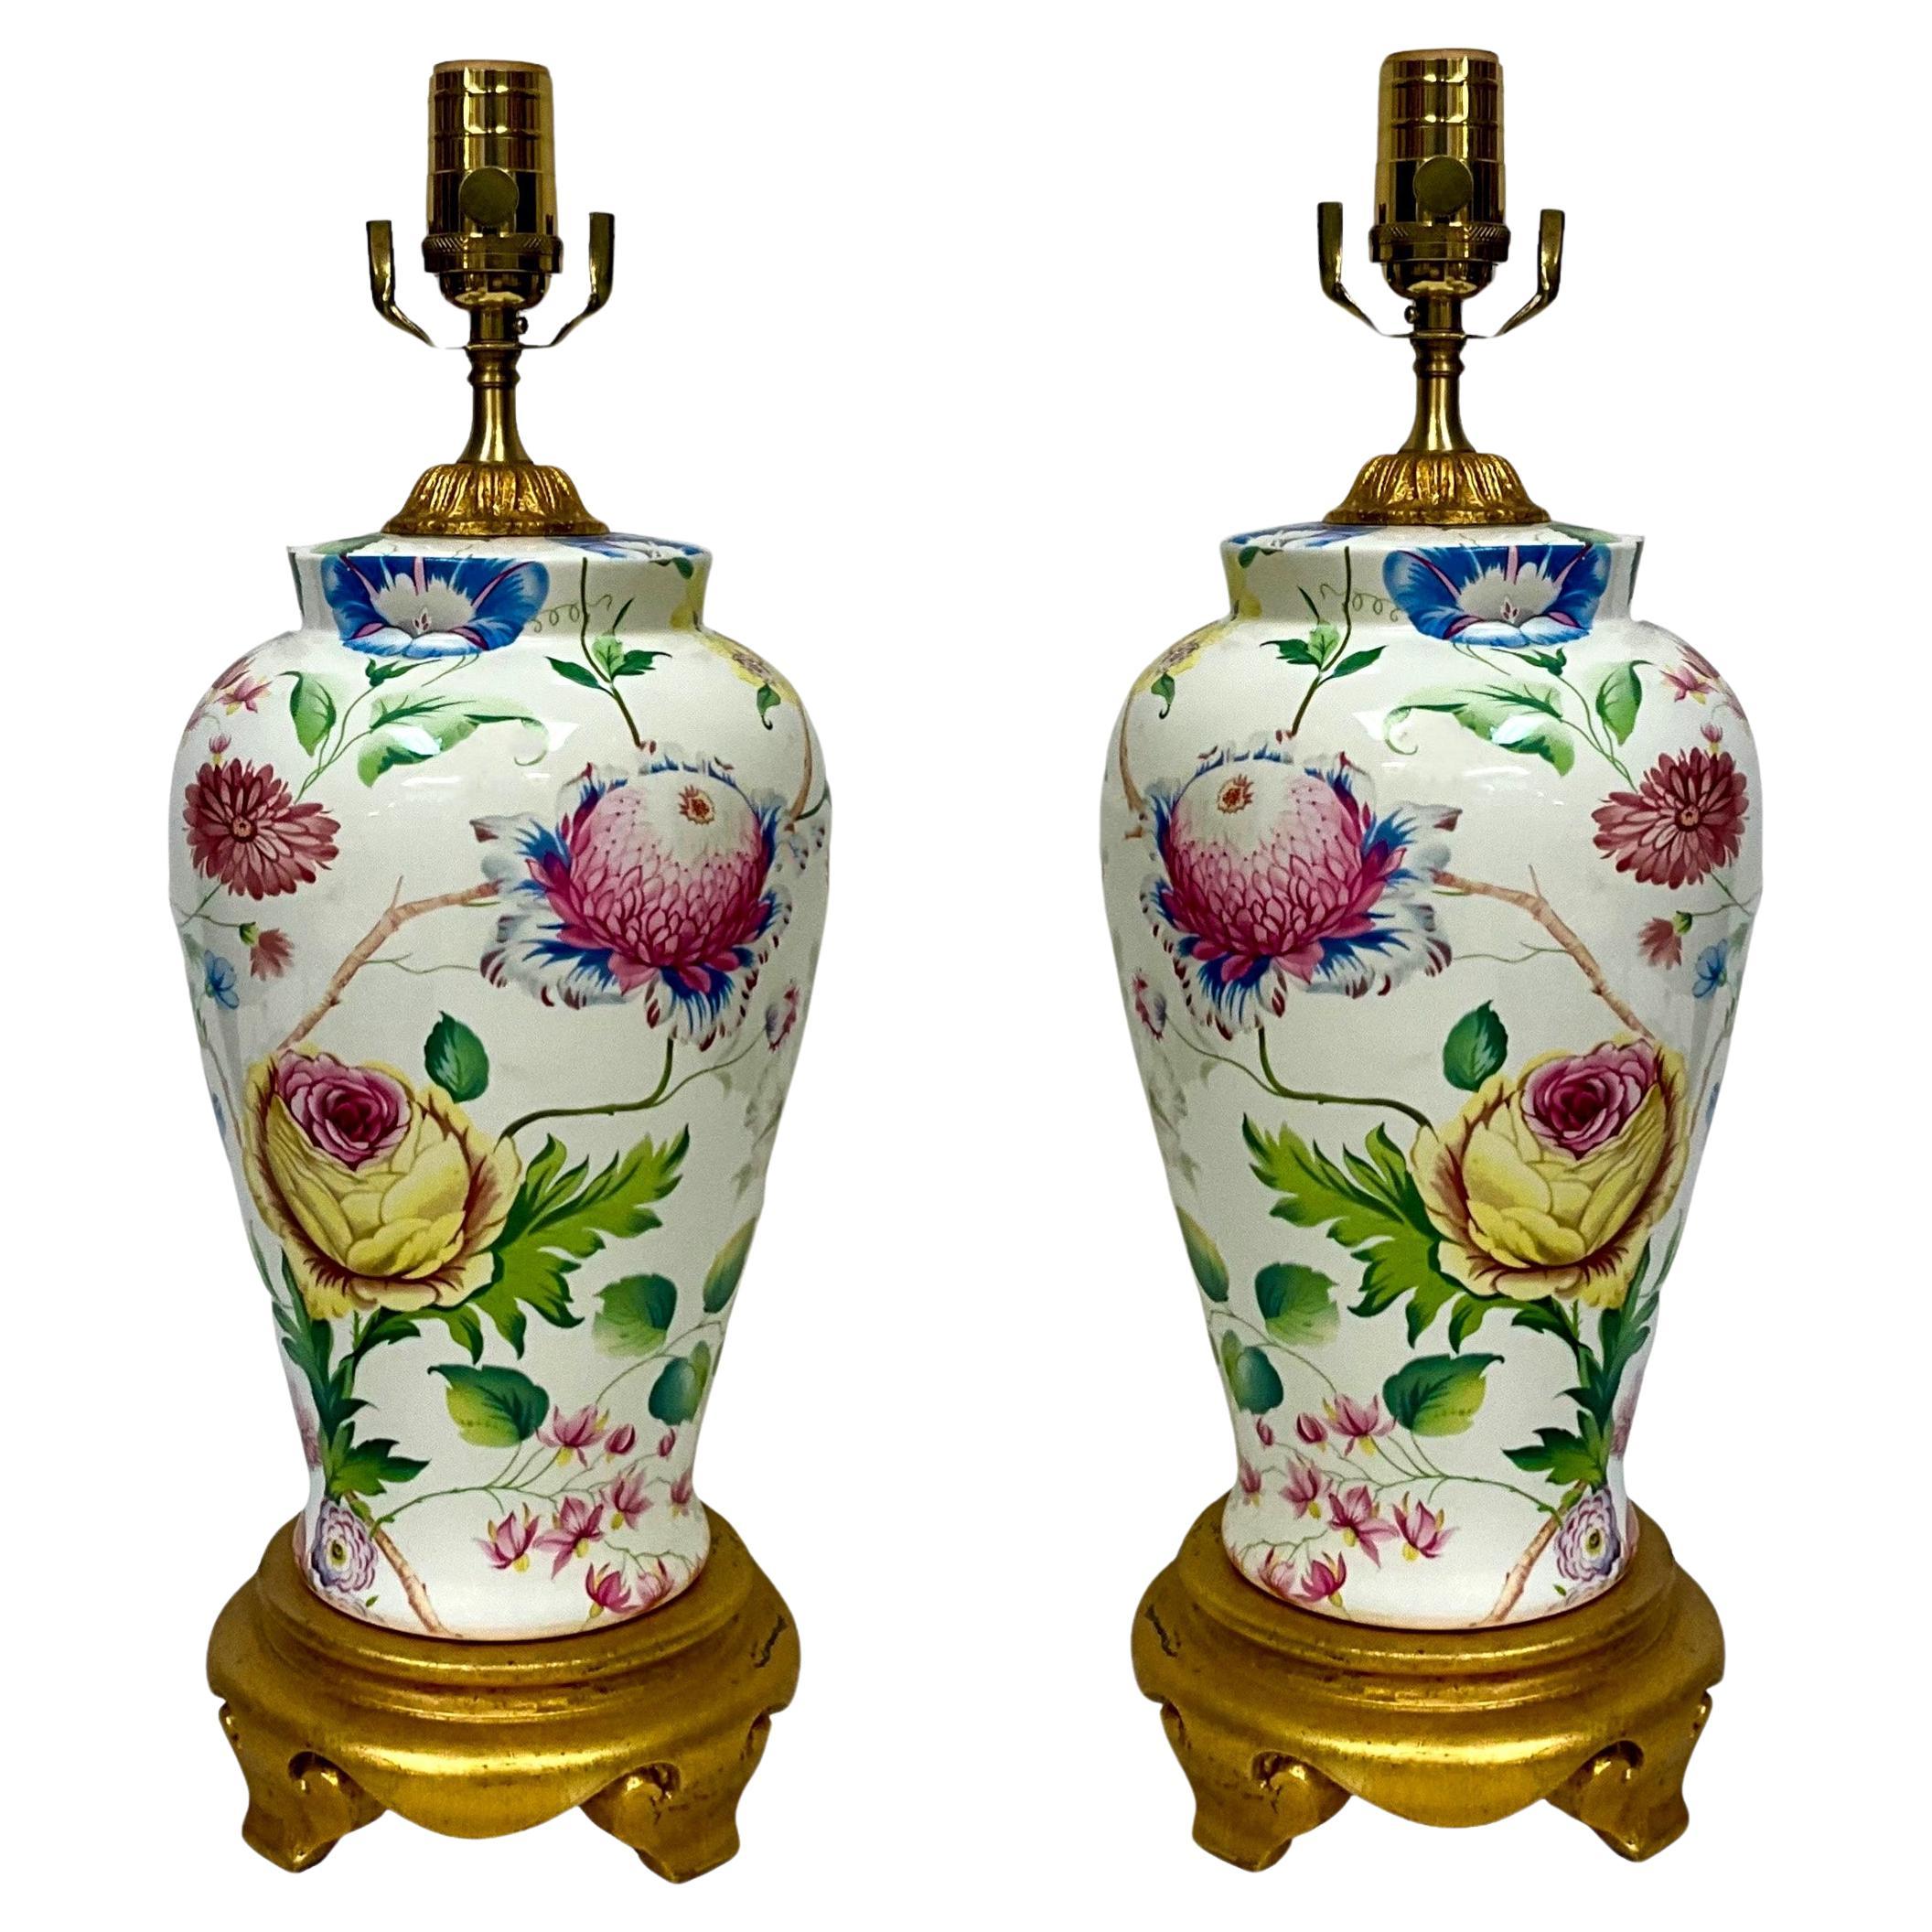 Porcelain Ginger Jar Form Floral / Botanical Table Lamps Att. Chelsea House-Pair For Sale